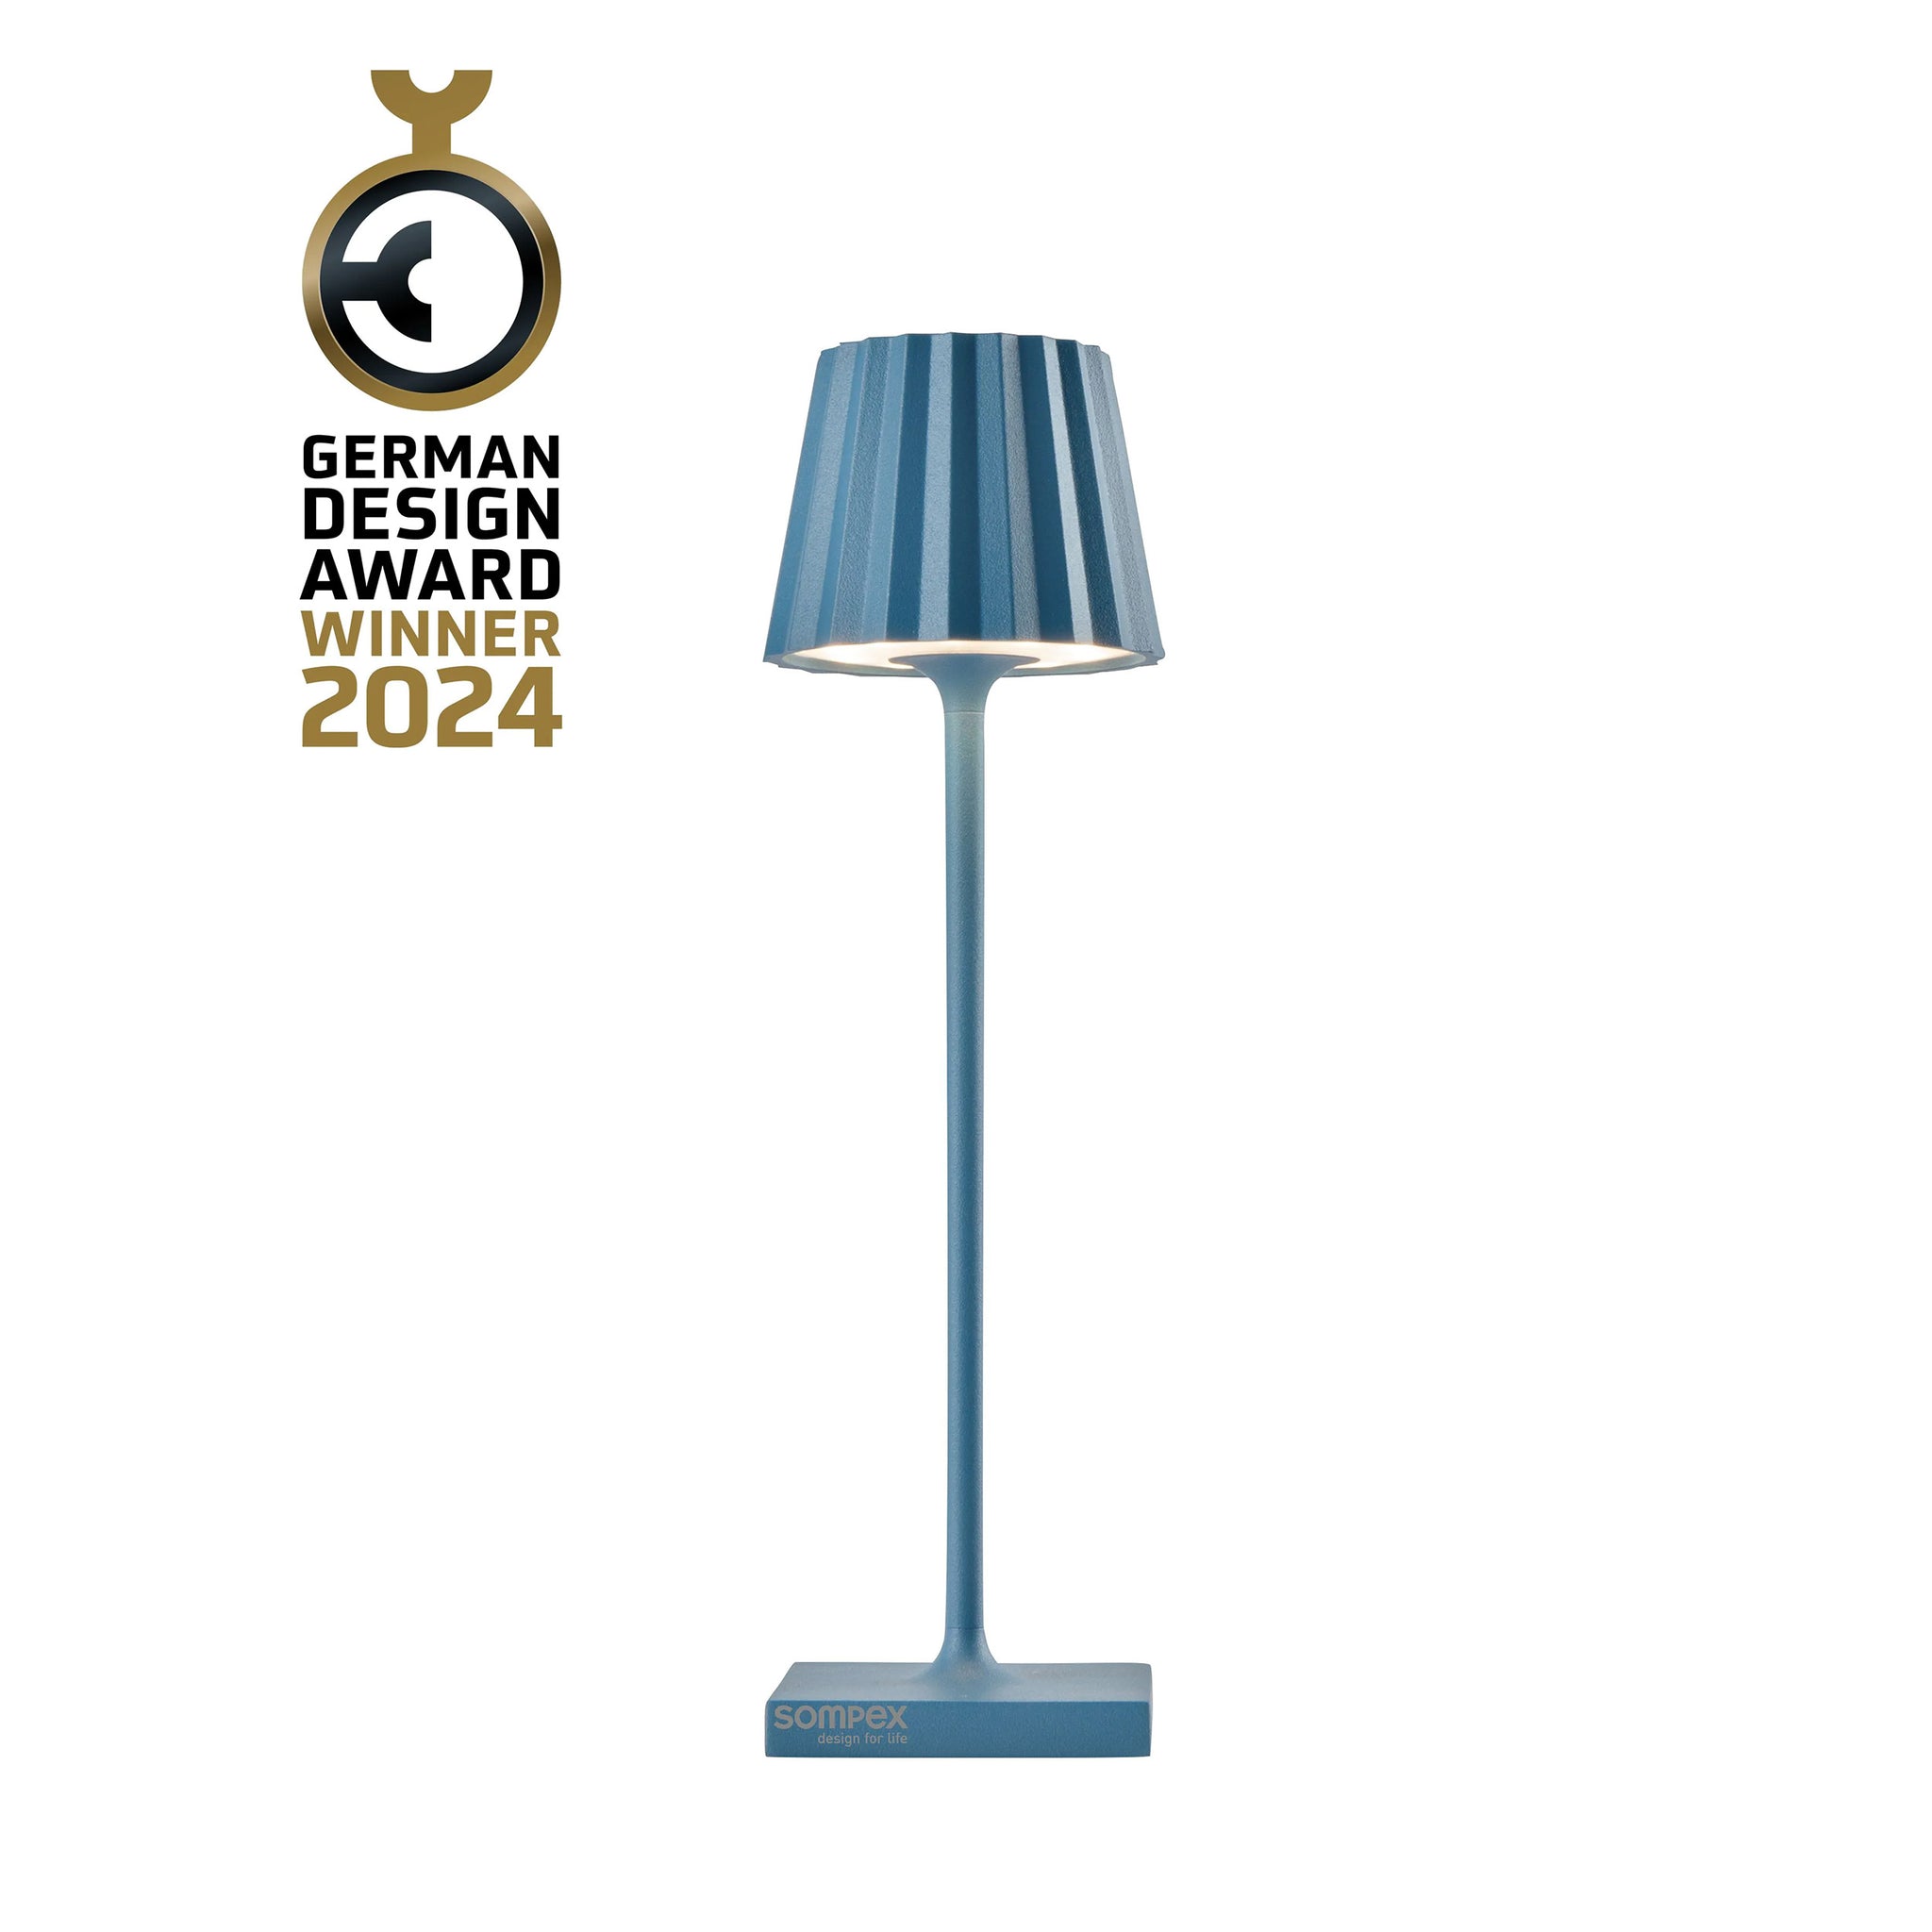 Sompex Troll Nano Blauw│Oplaadbare Tafellamp│Buitenverlichting│art. 78575│met logo German Design Award Winner 2024